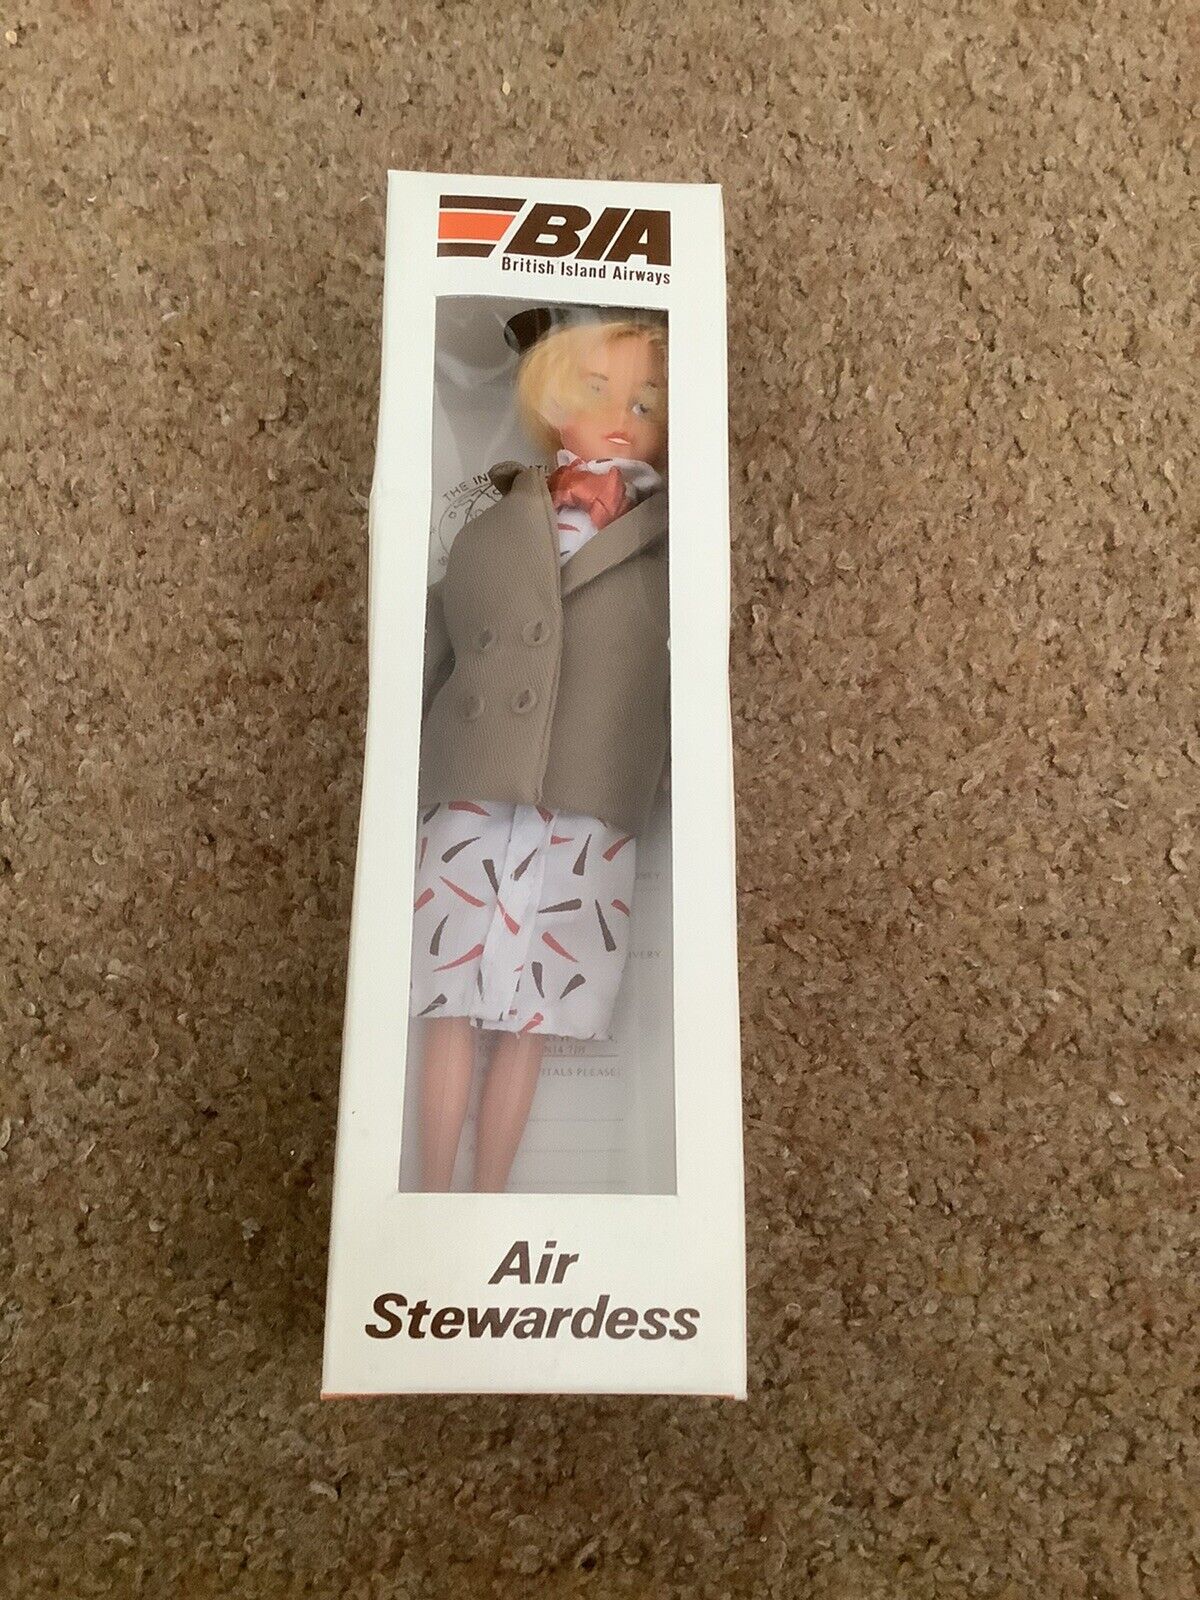 British Island Airways Air Stewardess Doll by Rexard. New in original box.